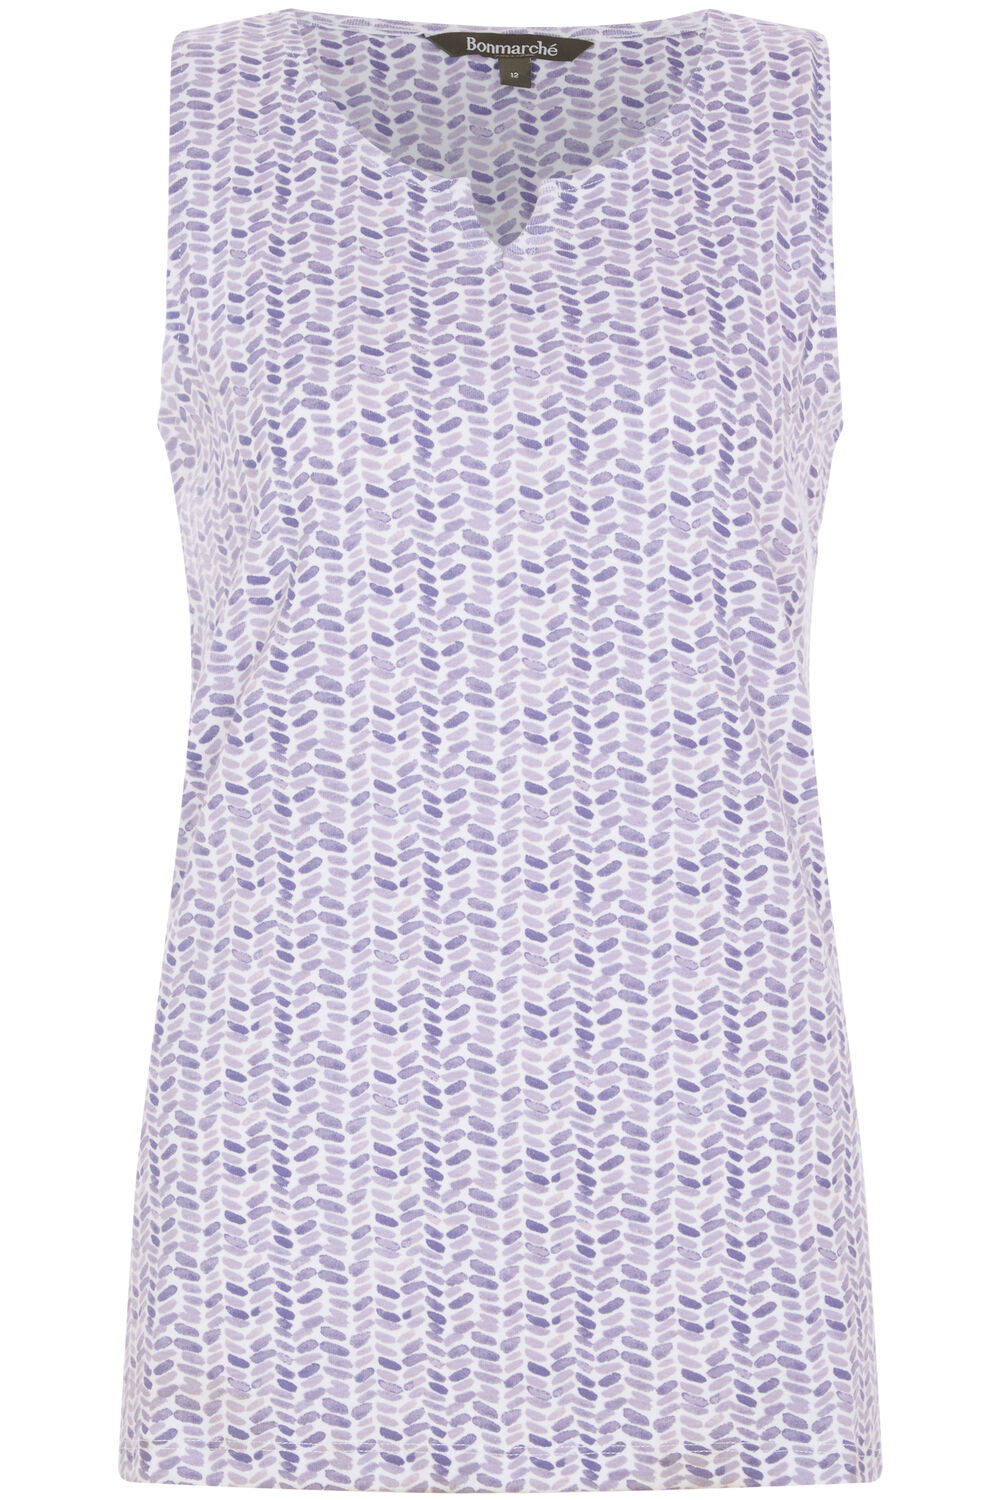 Bonmarche Purple Sleeveless Watercolour Chevron Print Notch Neck Vest, Size: 18